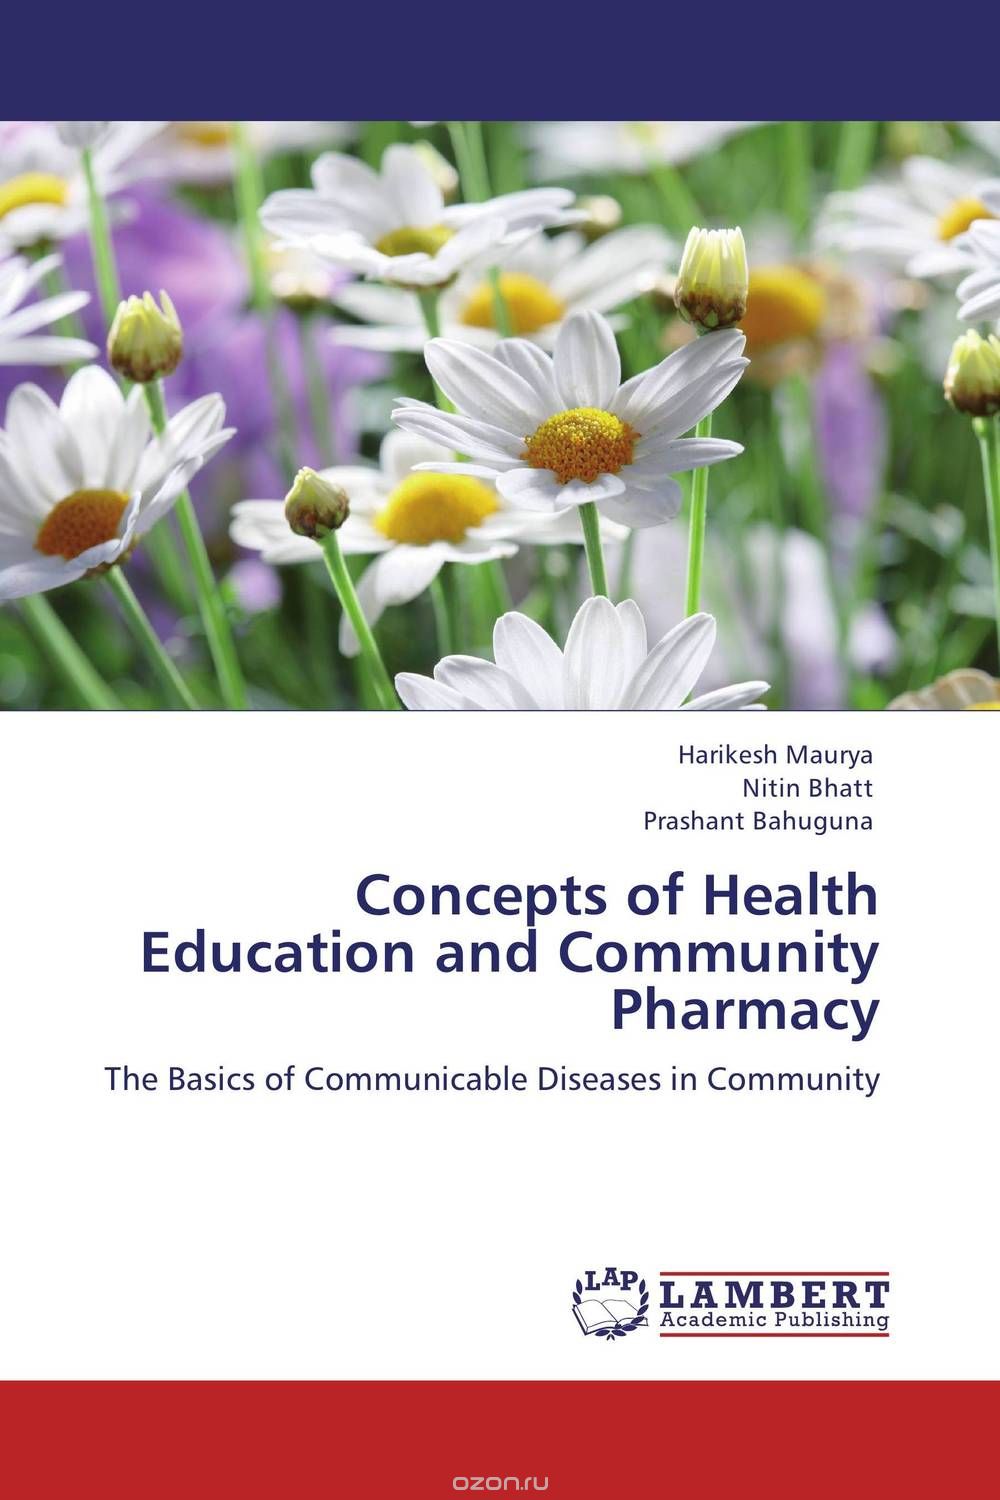 Скачать книгу "Concepts of Health Education and Community Pharmacy"